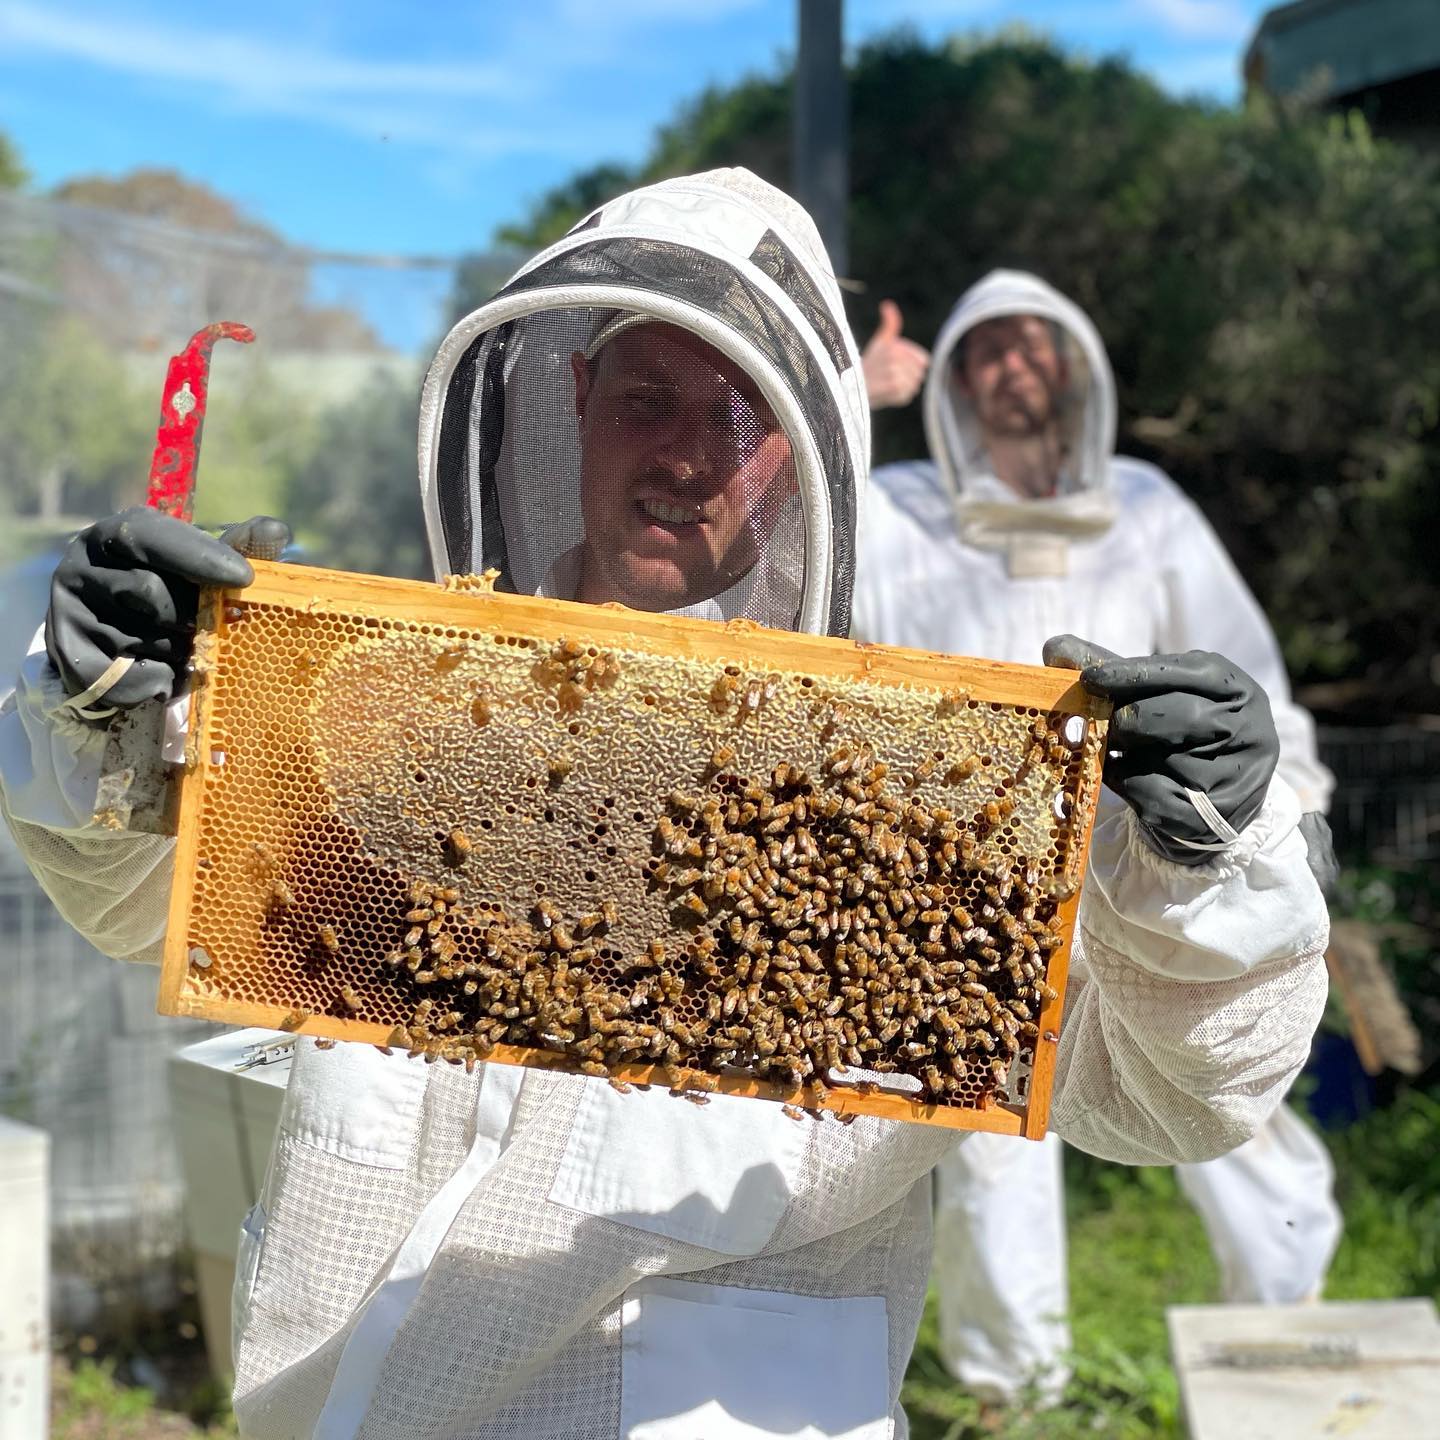 Melbourne Backyard Honey